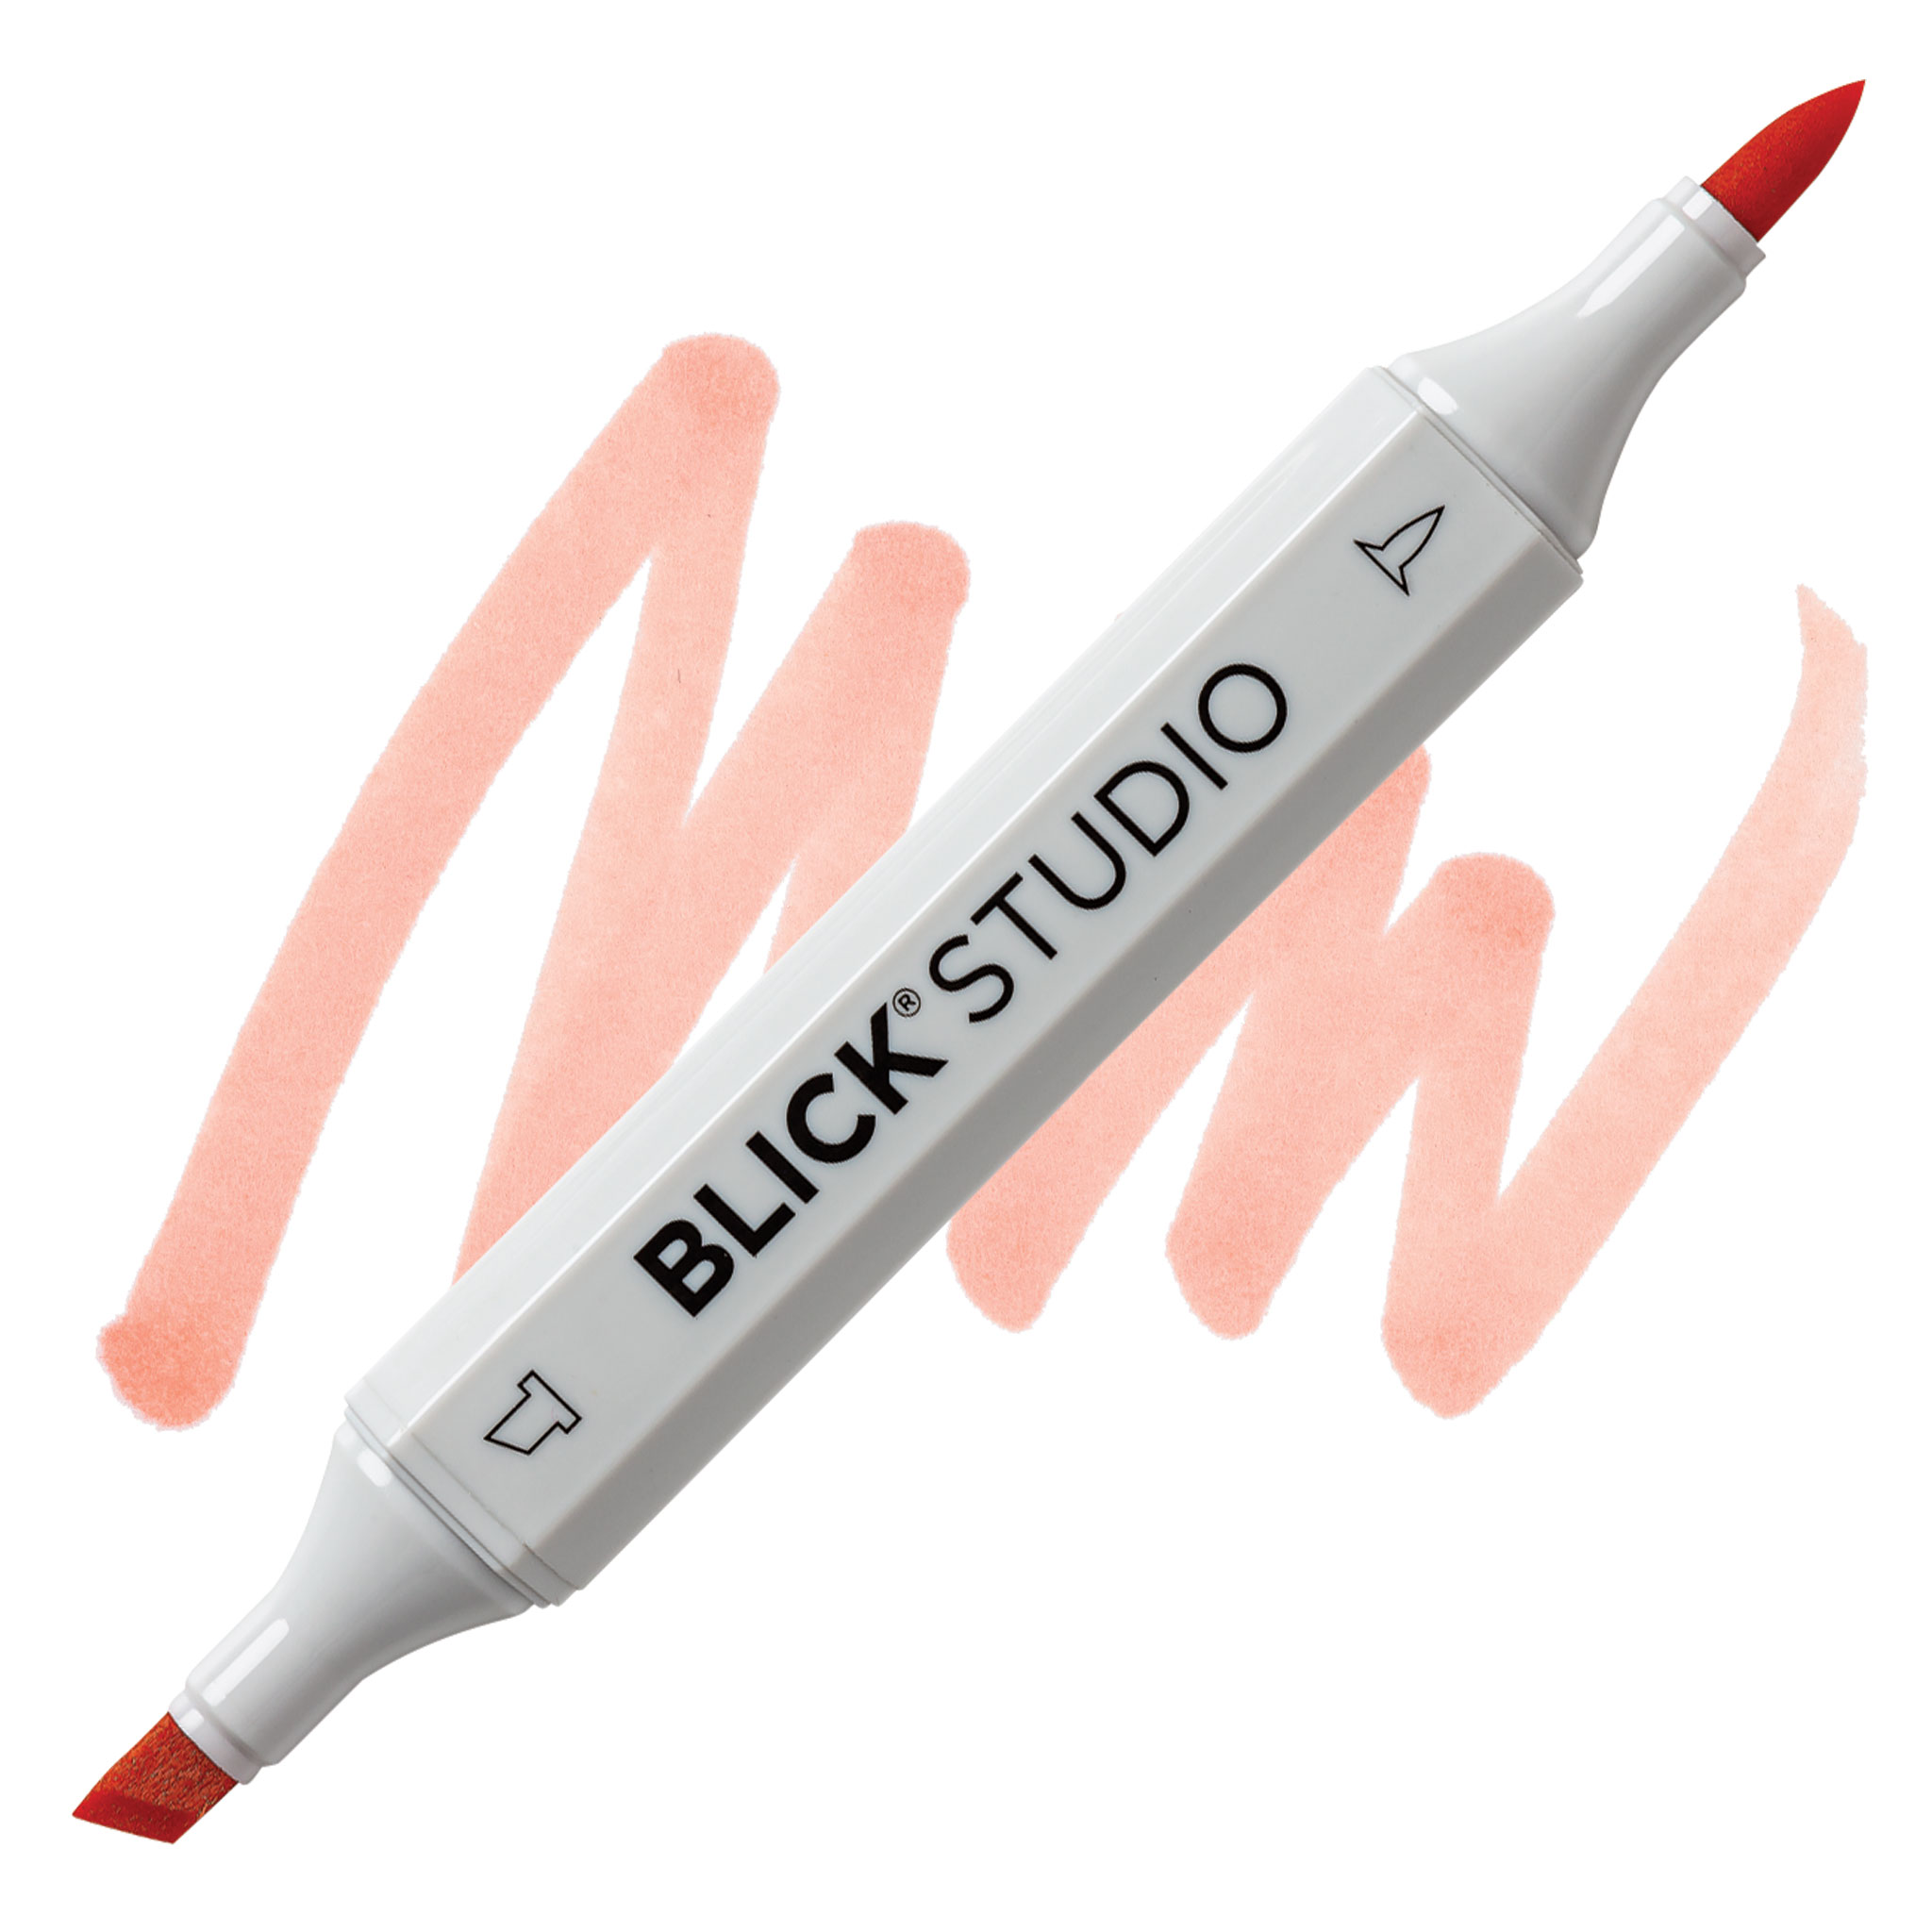 Tri-Tone Workbook  Blick Studio® Brush Markers